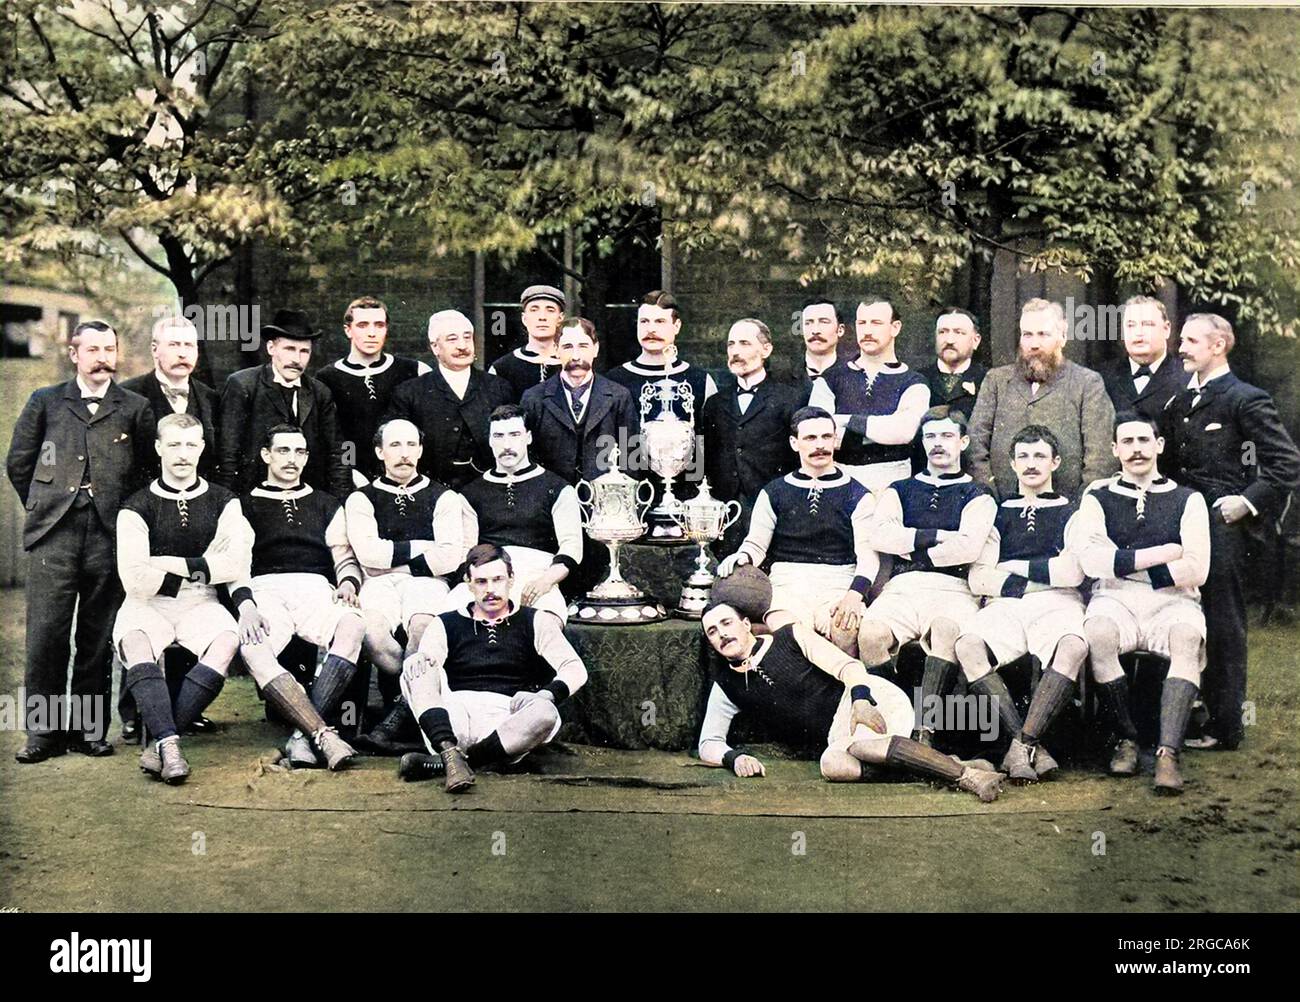 Aston Villa Football Club, con el equipo para la temporada 1896-1897. La fotografía muestra: Fila trasera, izquierda a derecha: G.B. Ramsay (Secretario), Dr. V.A. Jones, J.Grierson (Entrenador), H.Spencer, F.Cooper, T.Wilkes, J. Ansell (Presidente), D. Hodgetts, J.E. Margoschis (Presidente), C.S. Johnstone, J. Welford, I. Whitehouse, W. McGregor, J.T. Lees, F.W. RINDER. Fila media, sentada, de izquierda a derecha: R. Chatt, J.W. Crabtree, J. Reynolds, Jas. Cowan, J. Devey (Capitán), F. Burton, D. Athersmith, J. Campbell. Primera fila, en el suelo, de izquierda a derecha: S. Smith, John Cowan. Foto de stock